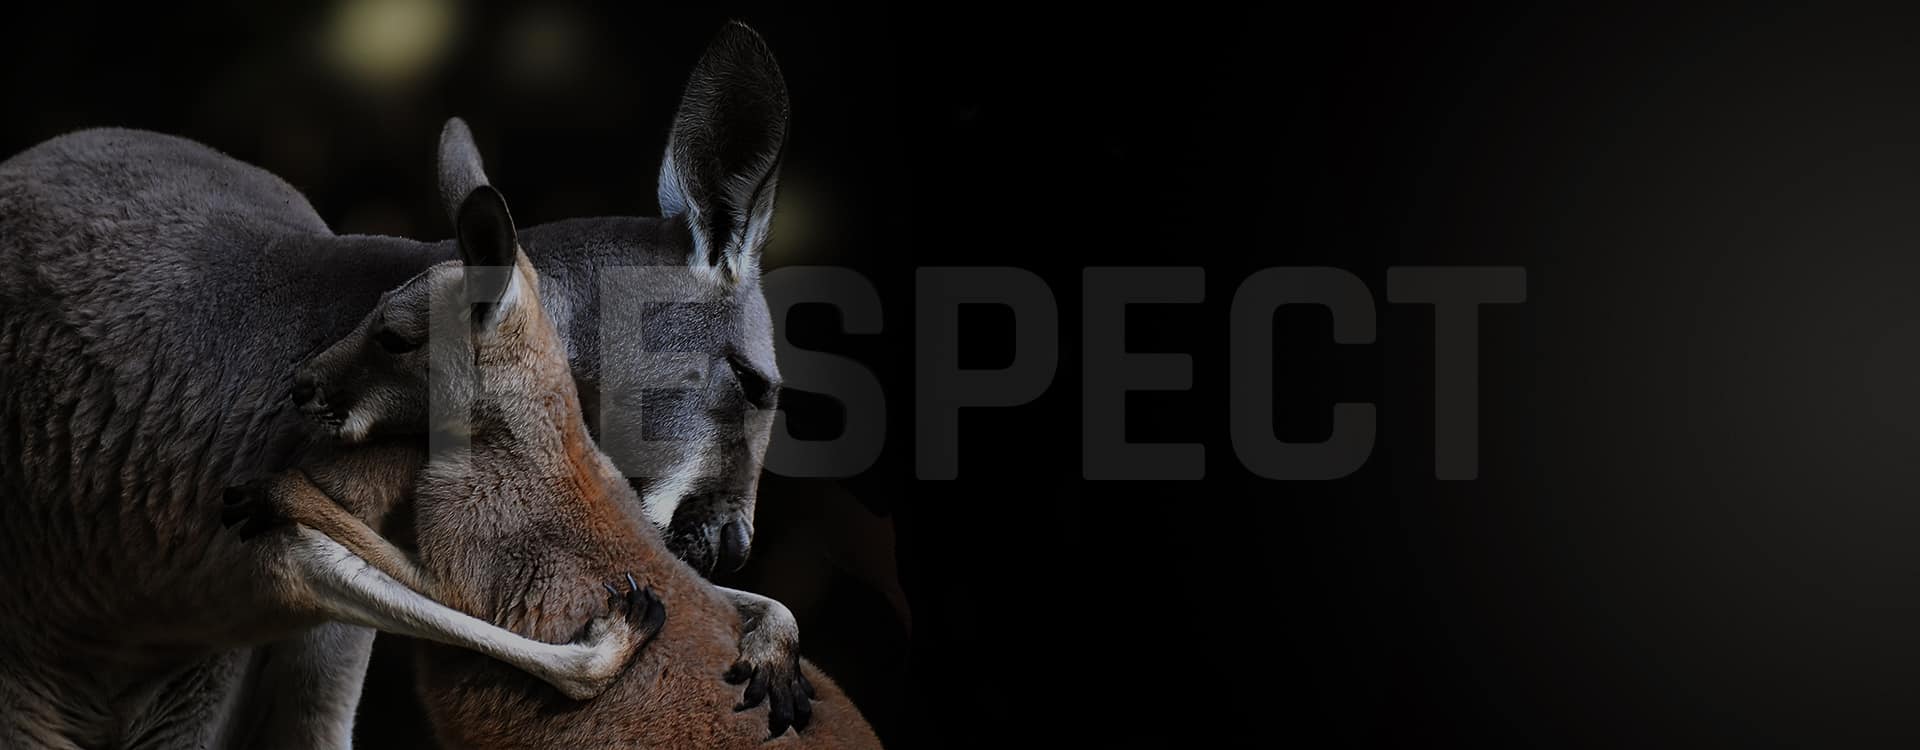 kangaroo respect life virus power racing suit